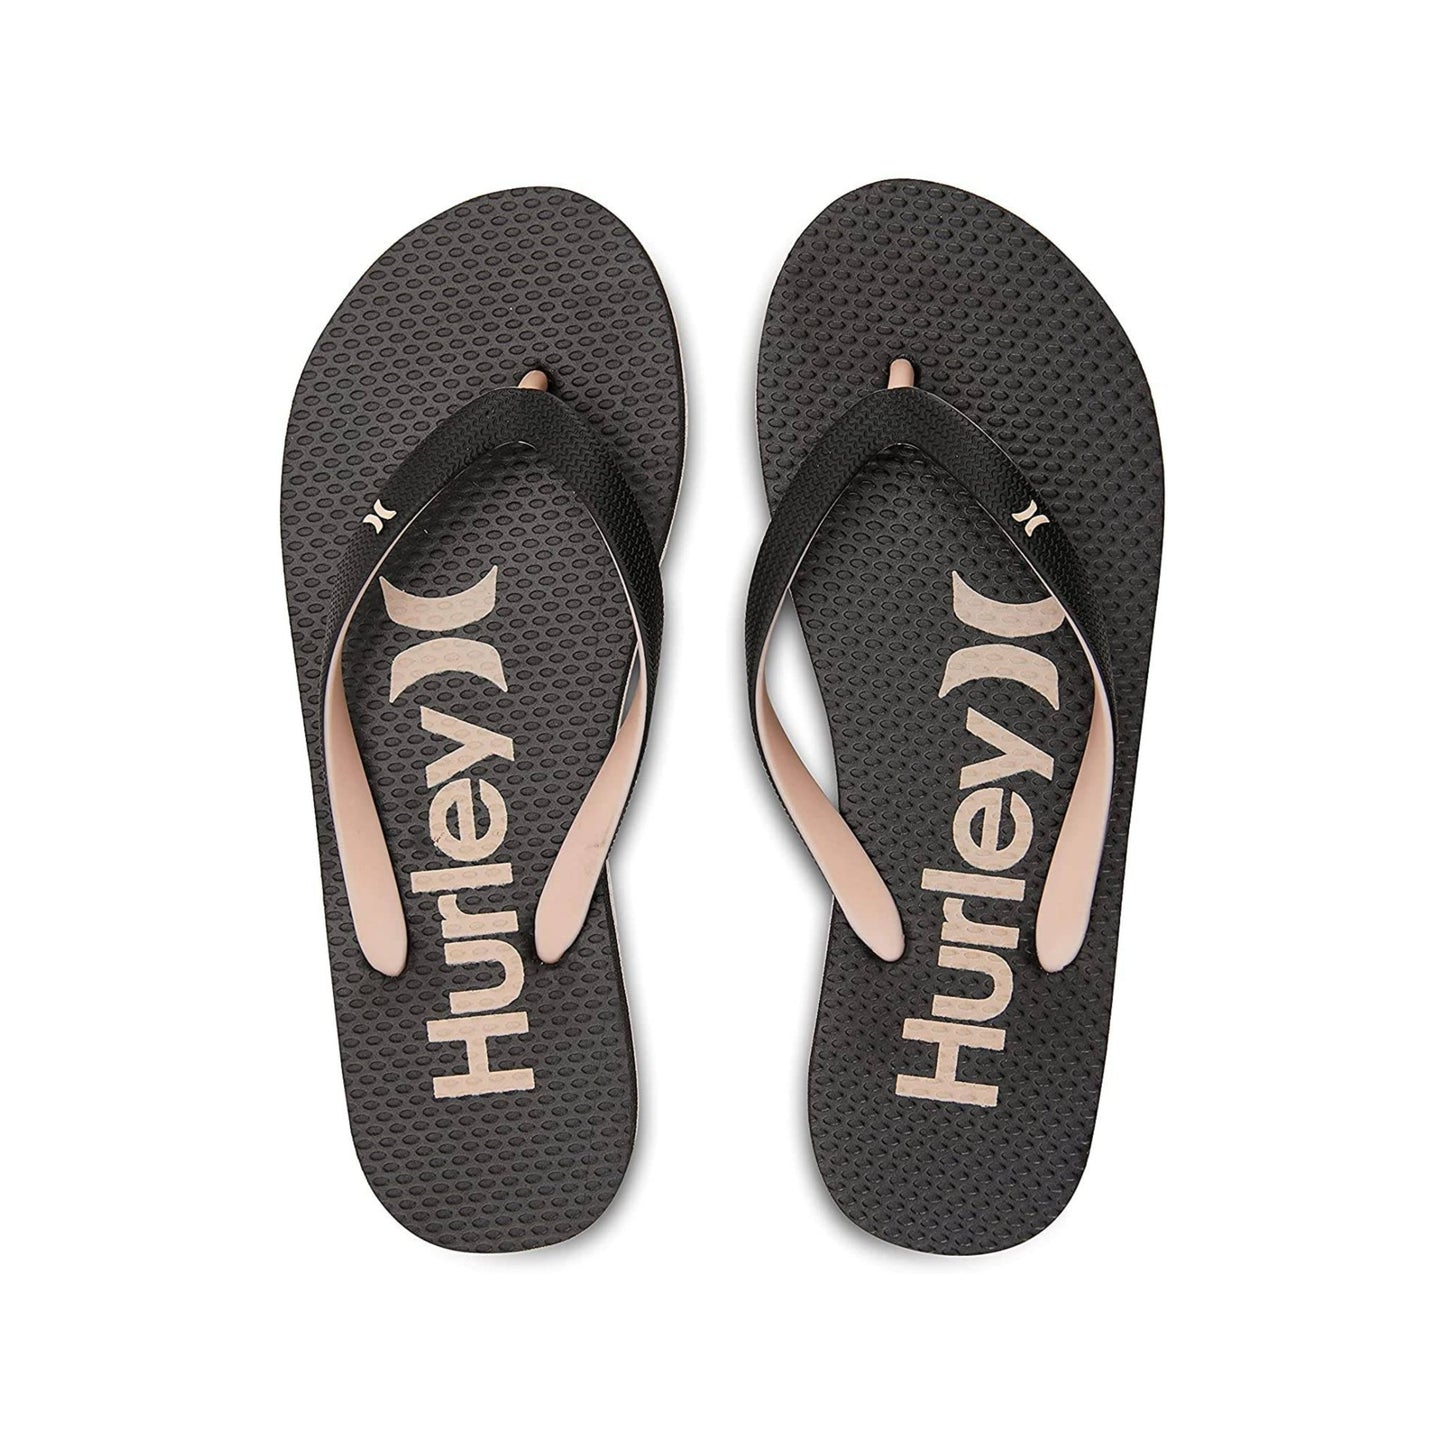 Hurley Women's Flip Flops Cute Casual Summer Thongs Comfort Slip-On Sandal Beach Wear, Black/Shimmer, 7